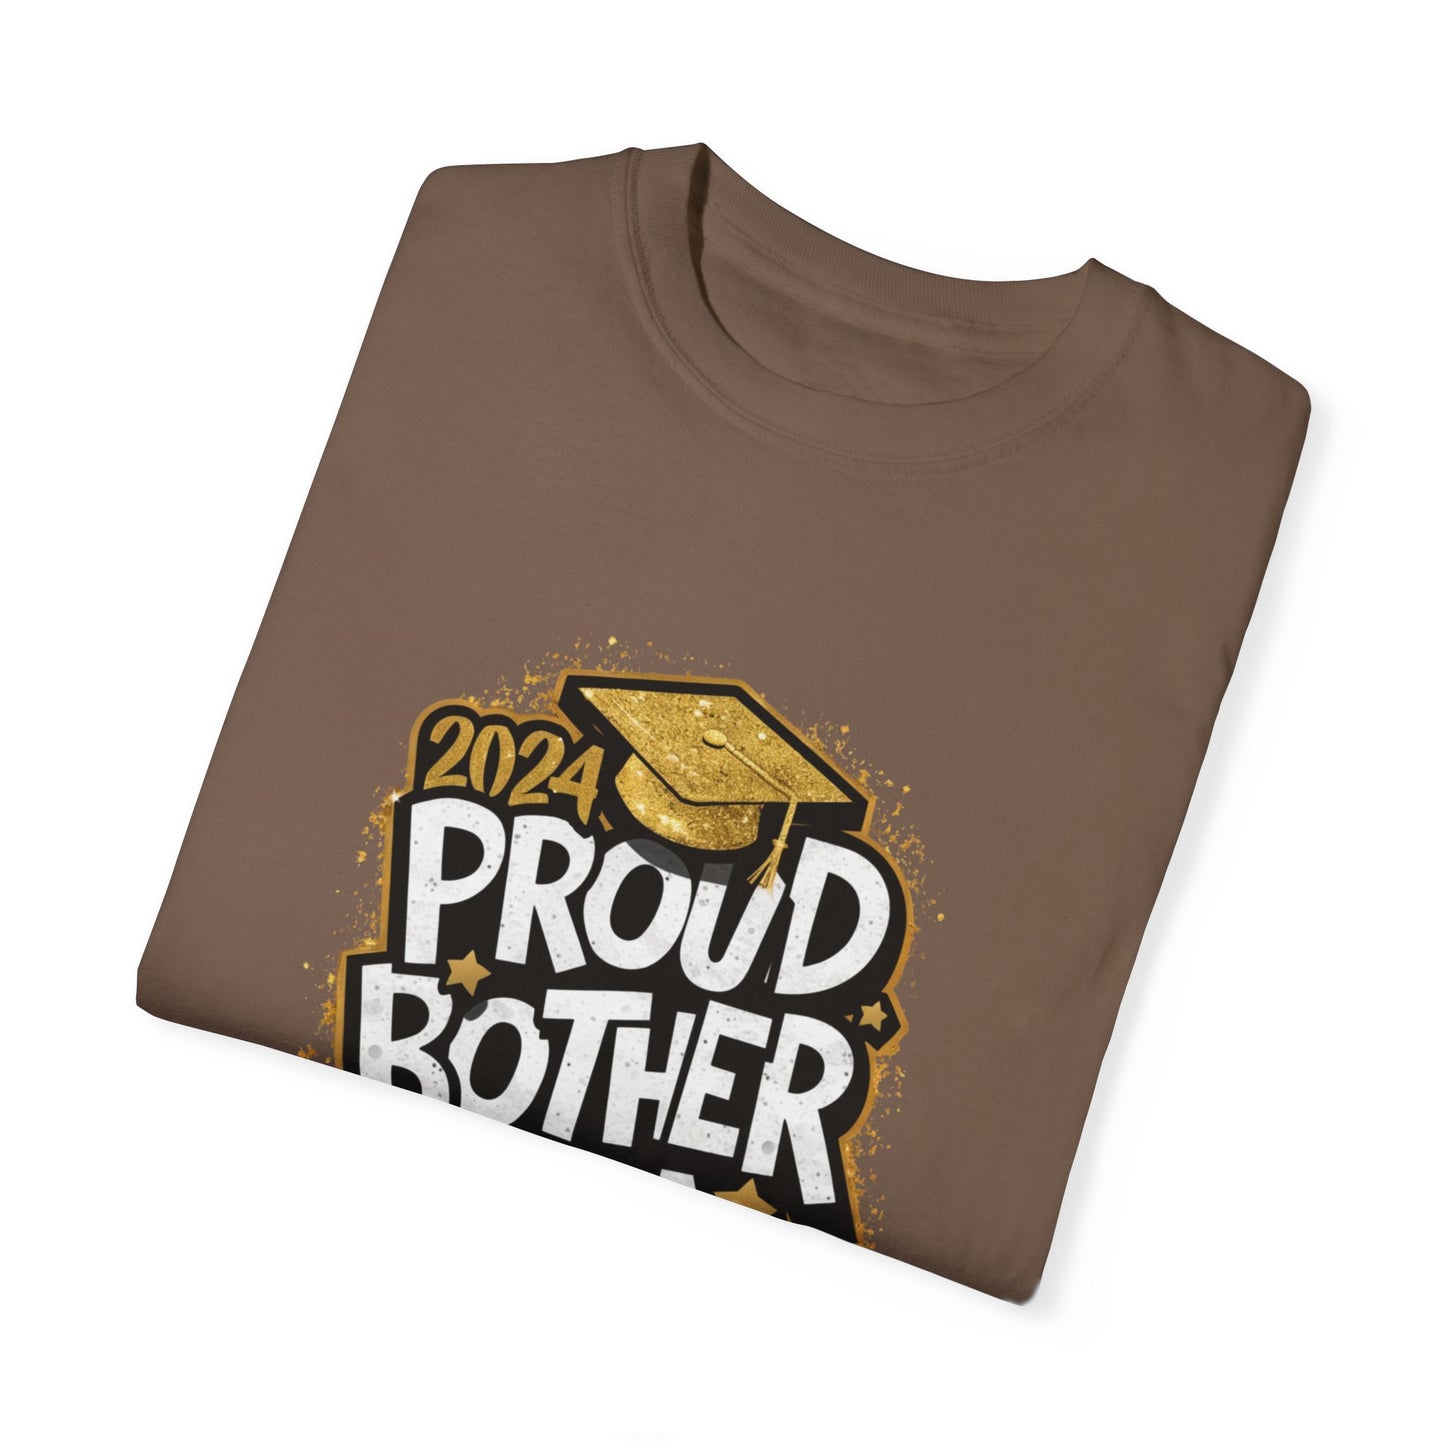 Proud Brother of a 2024 Graduate Unisex Garment-dyed T-shirt Cotton Funny Humorous Graphic Soft Premium Unisex Men Women Espresso T-shirt Birthday Gift-59